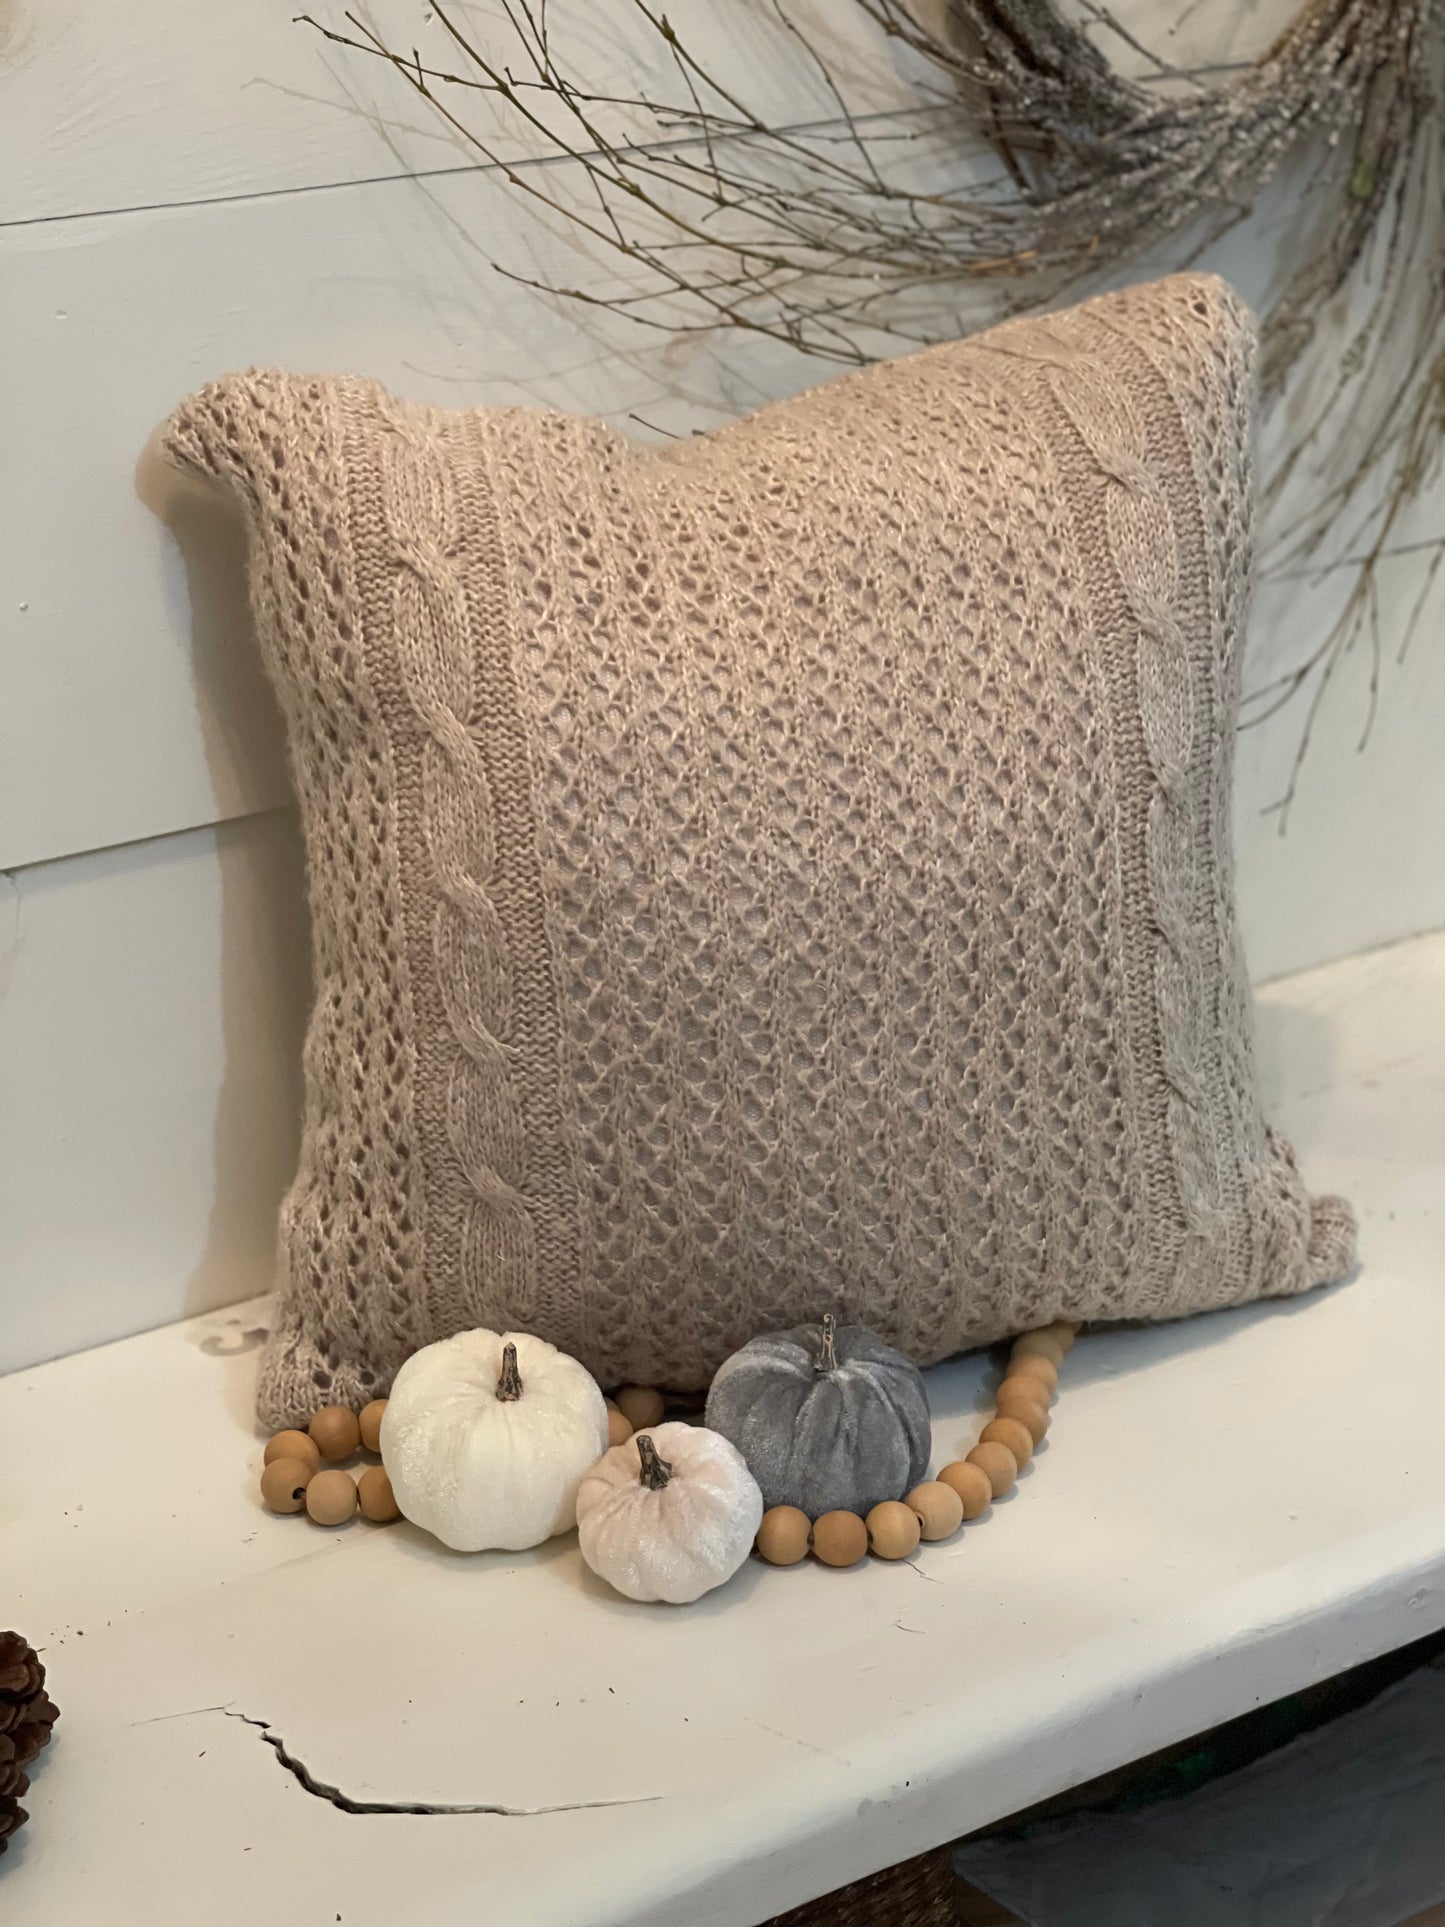 Toasty tan sweater pillow, upcycled pillow, sweater knit pillow